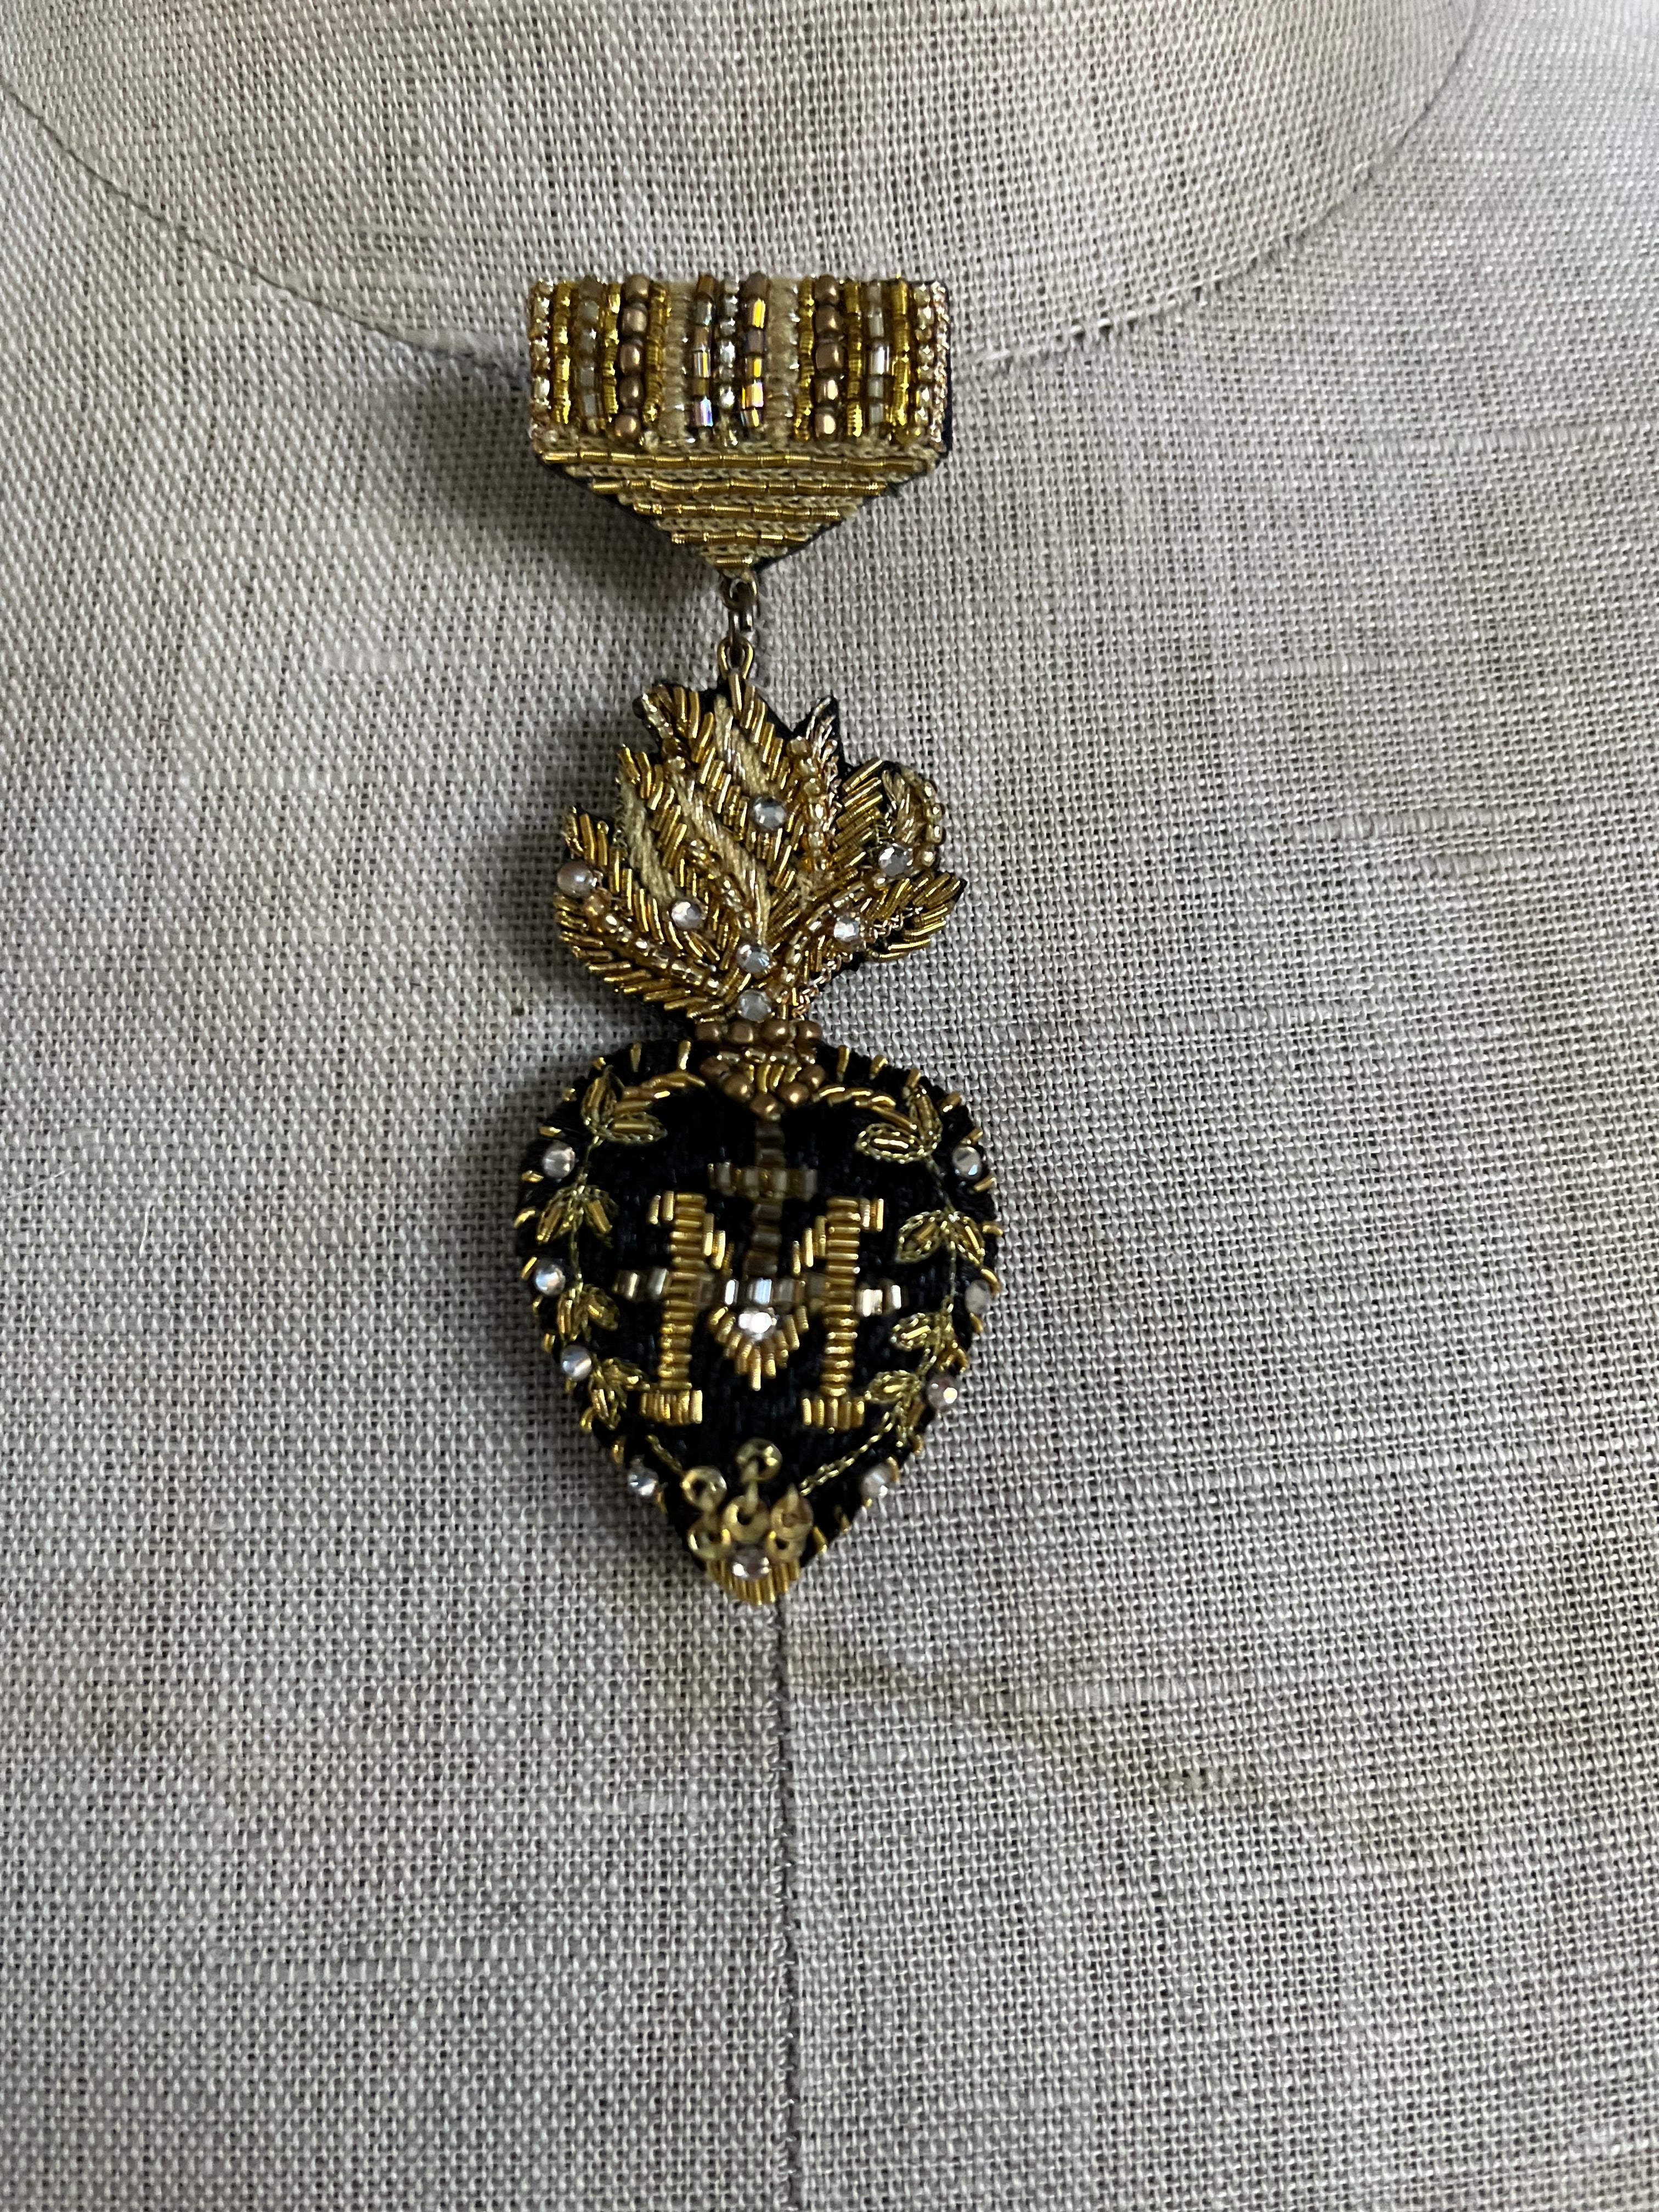 Handmade Brooch Pin - Mona Heart